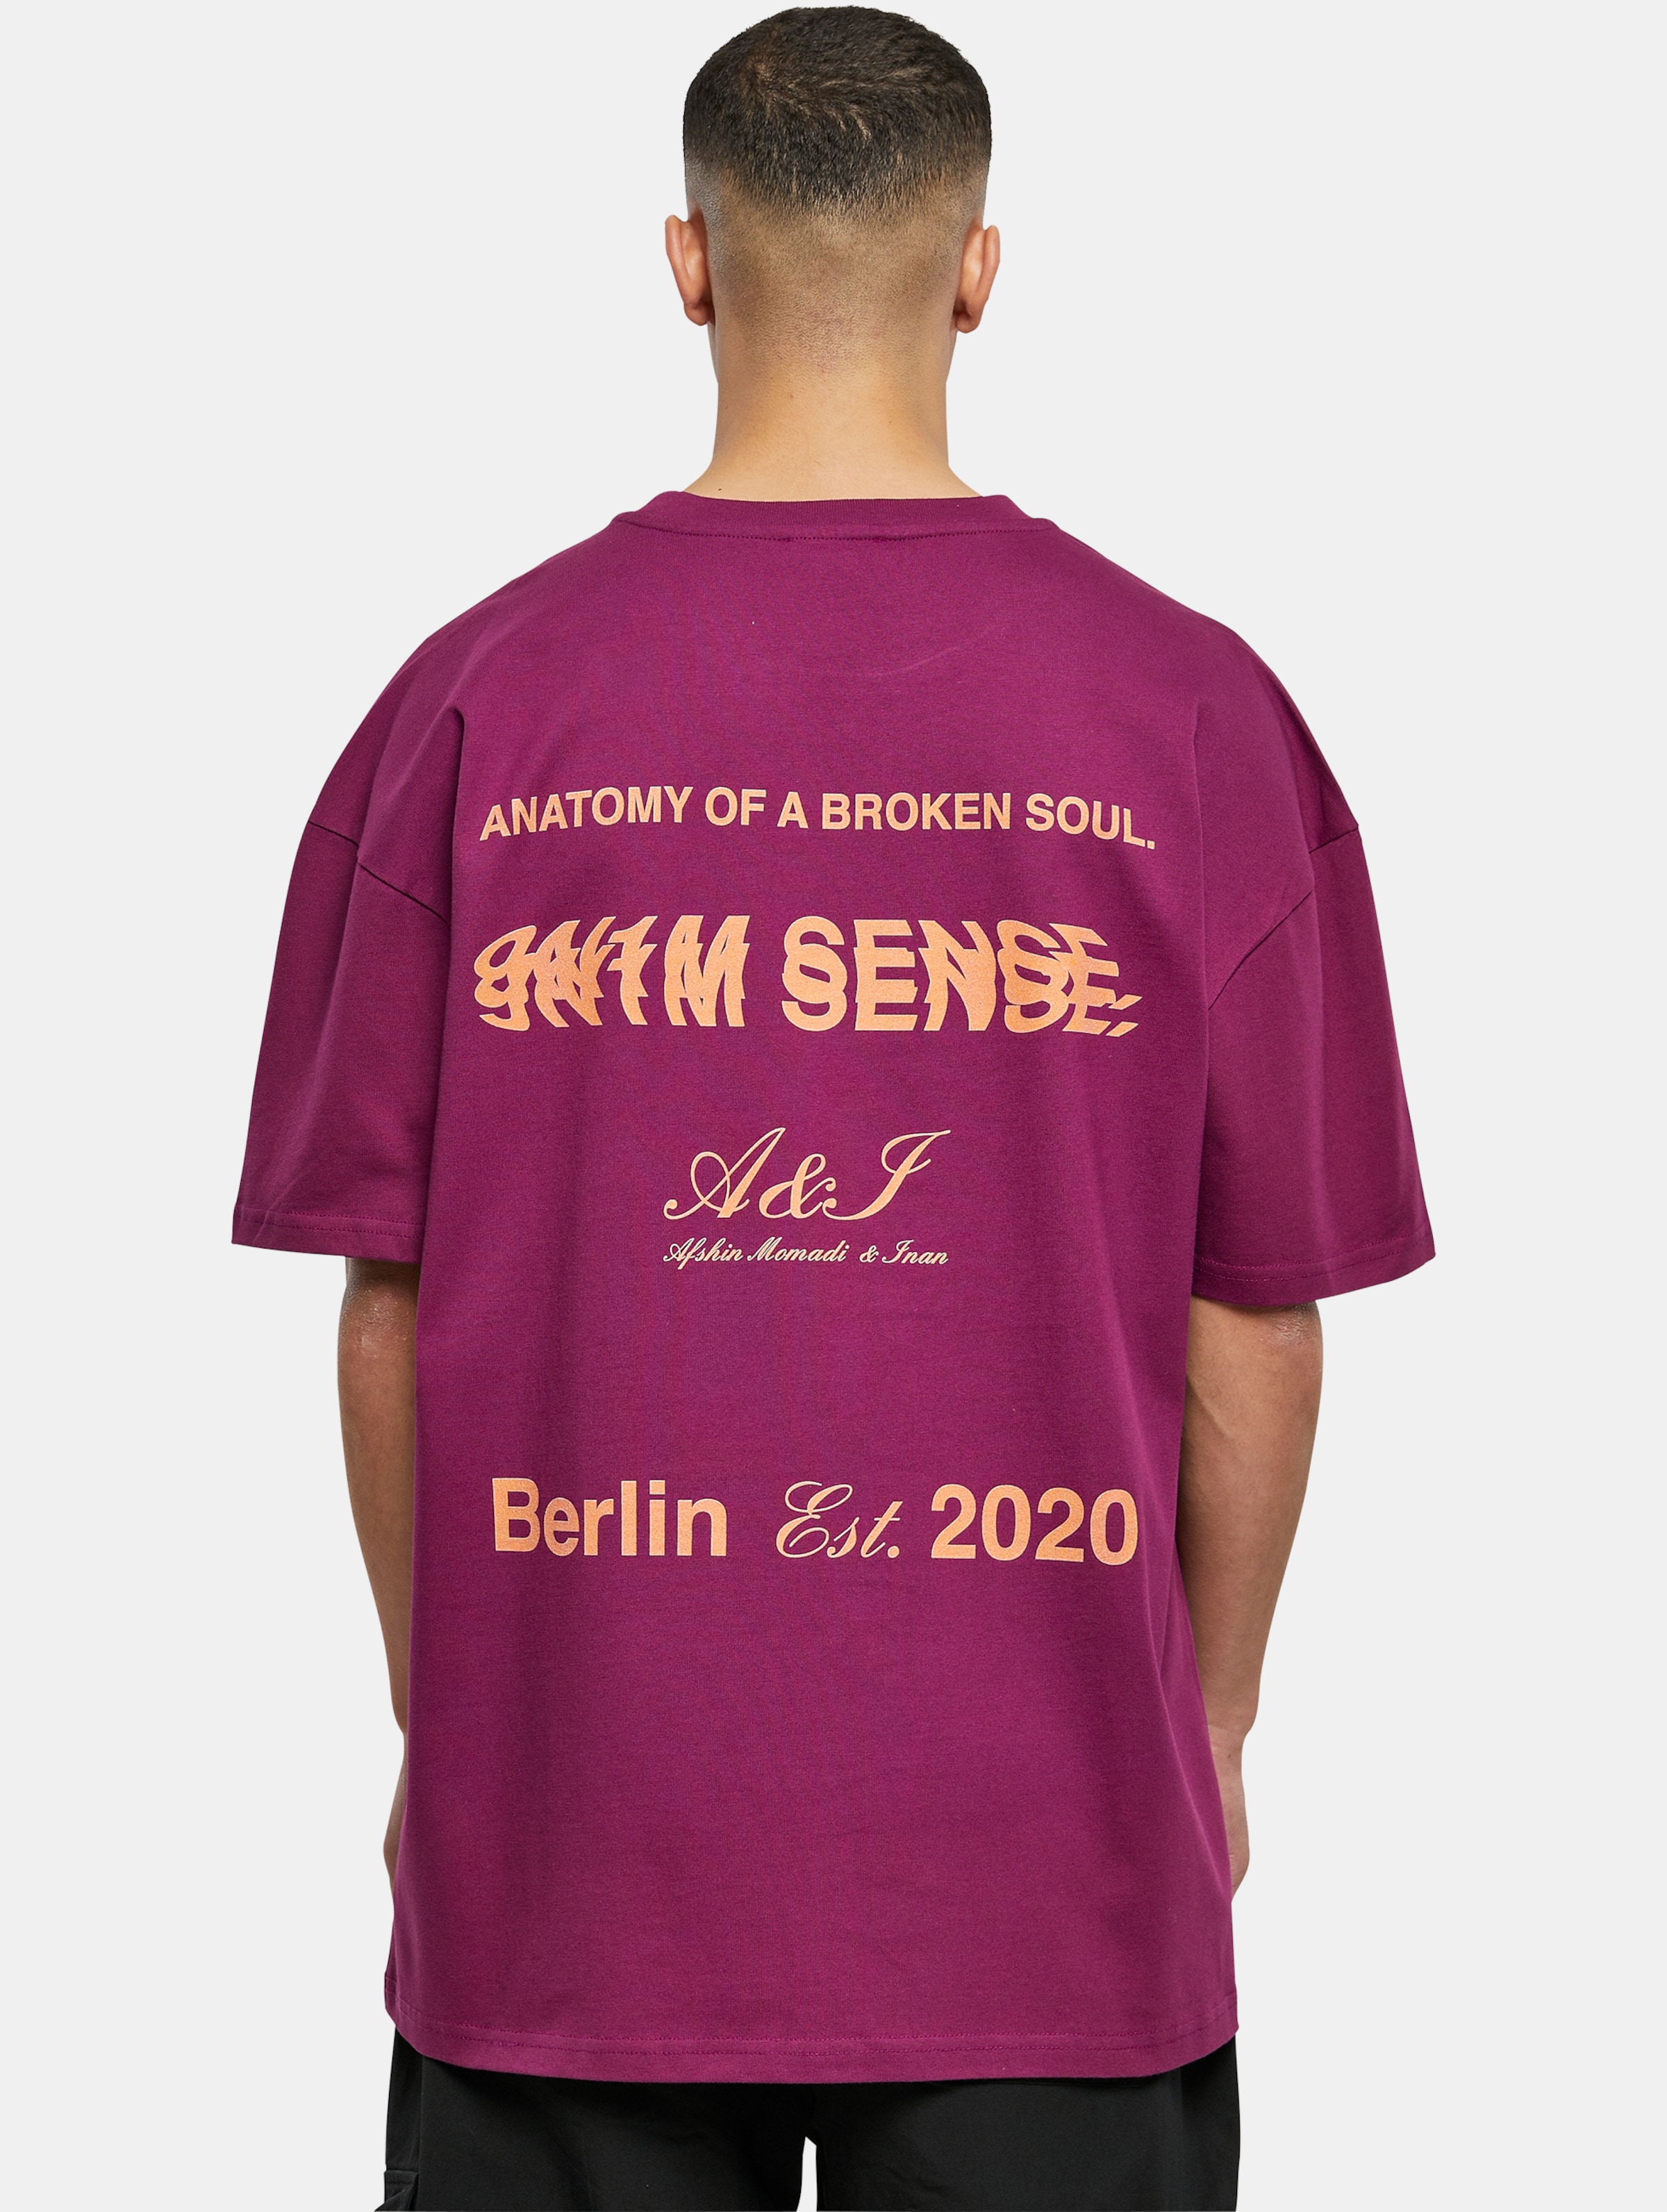 9N1M SENSE ANATOMY 2 T-Shirt Männer,Unisex op kleur violet, Maat S